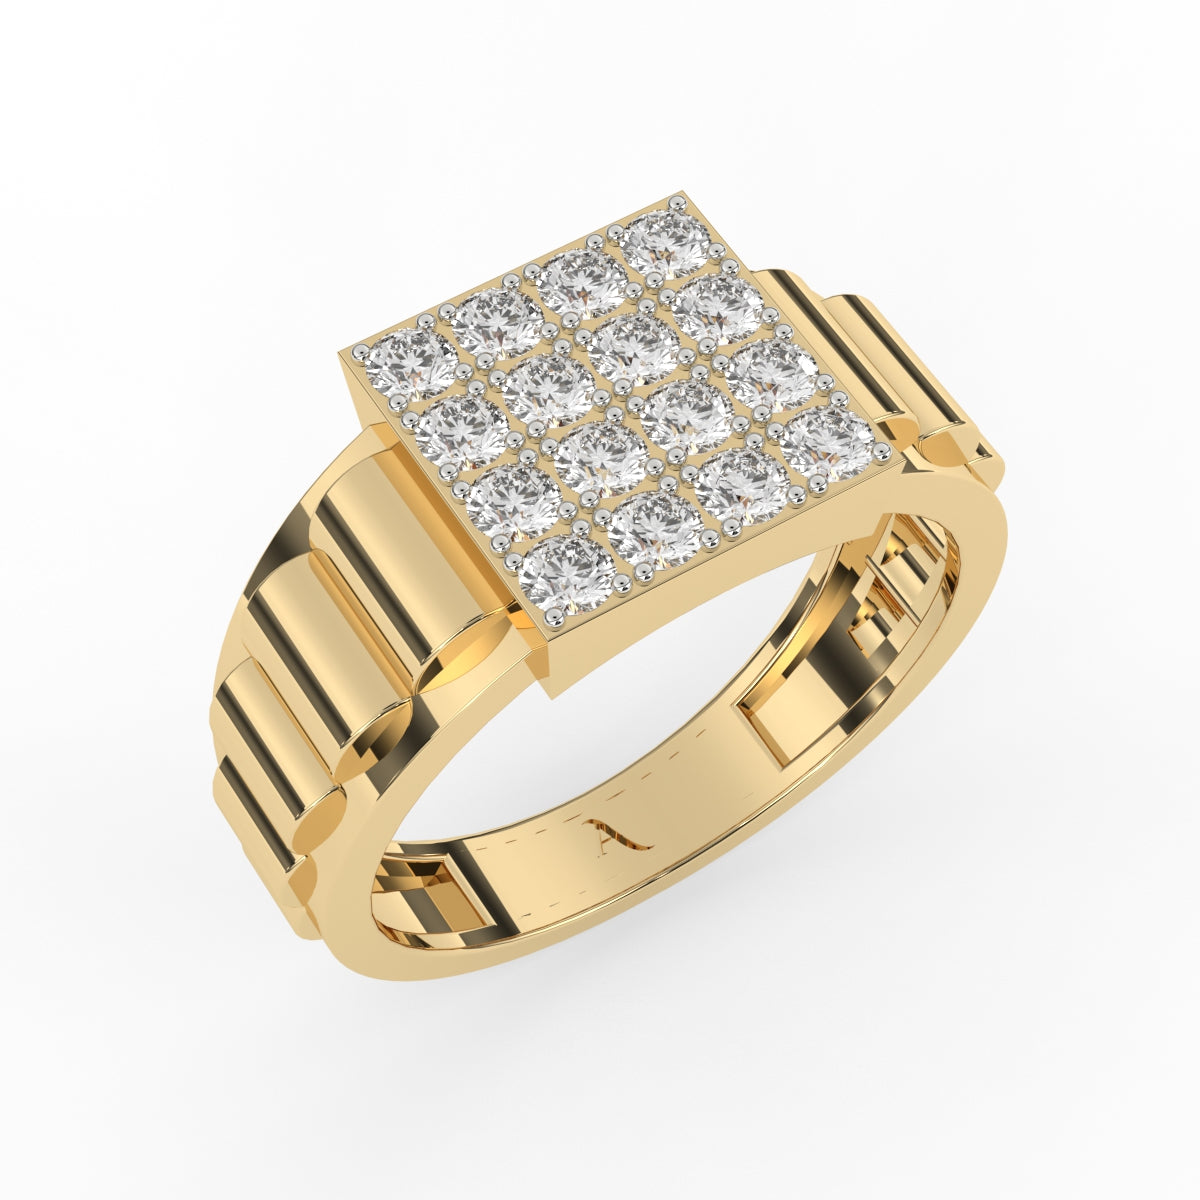 Diamond Rings for Men - Sirius jewels Offer On Real Diamond Jewellery